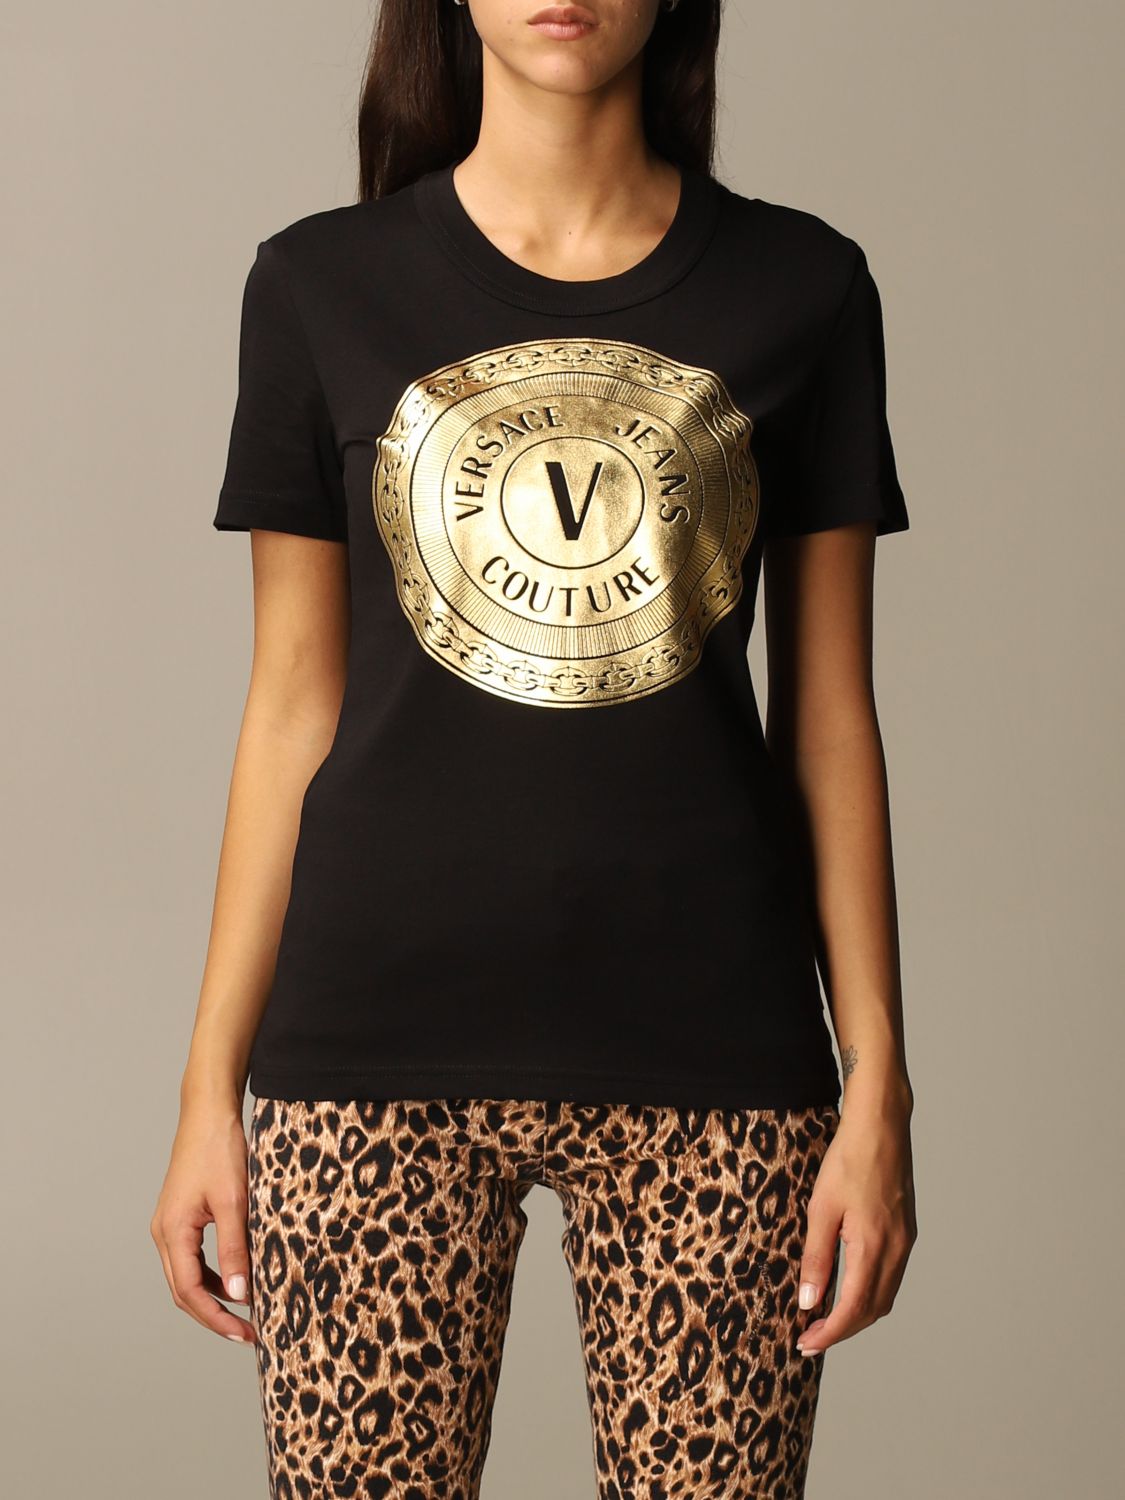 versace black t shirt women's